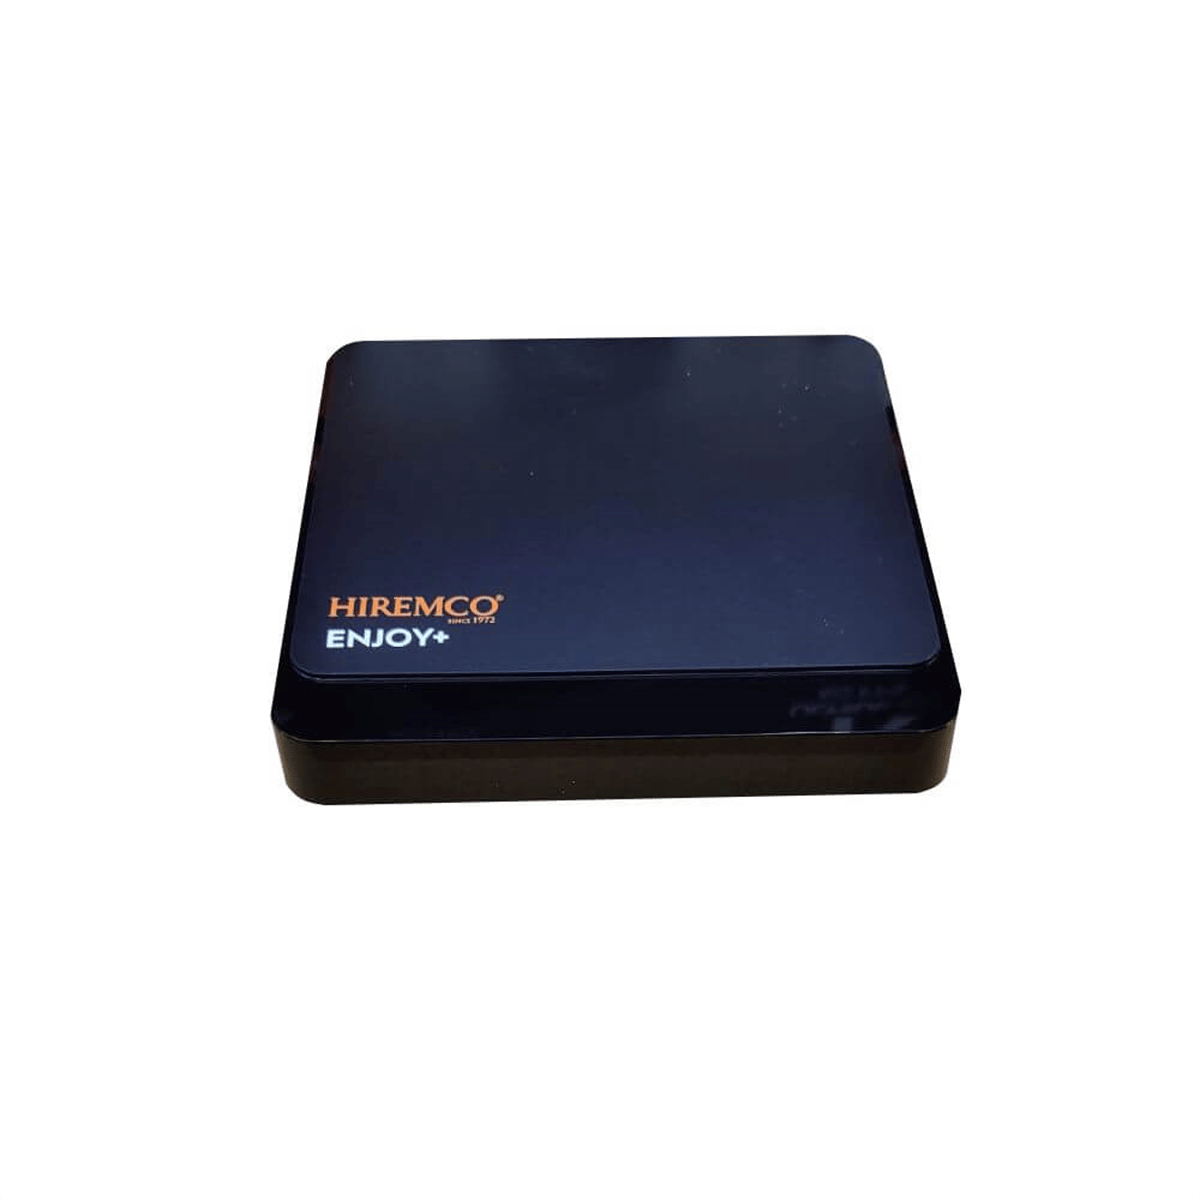 Hiremco 4K UltraHD Enjoy+ Android TV Box